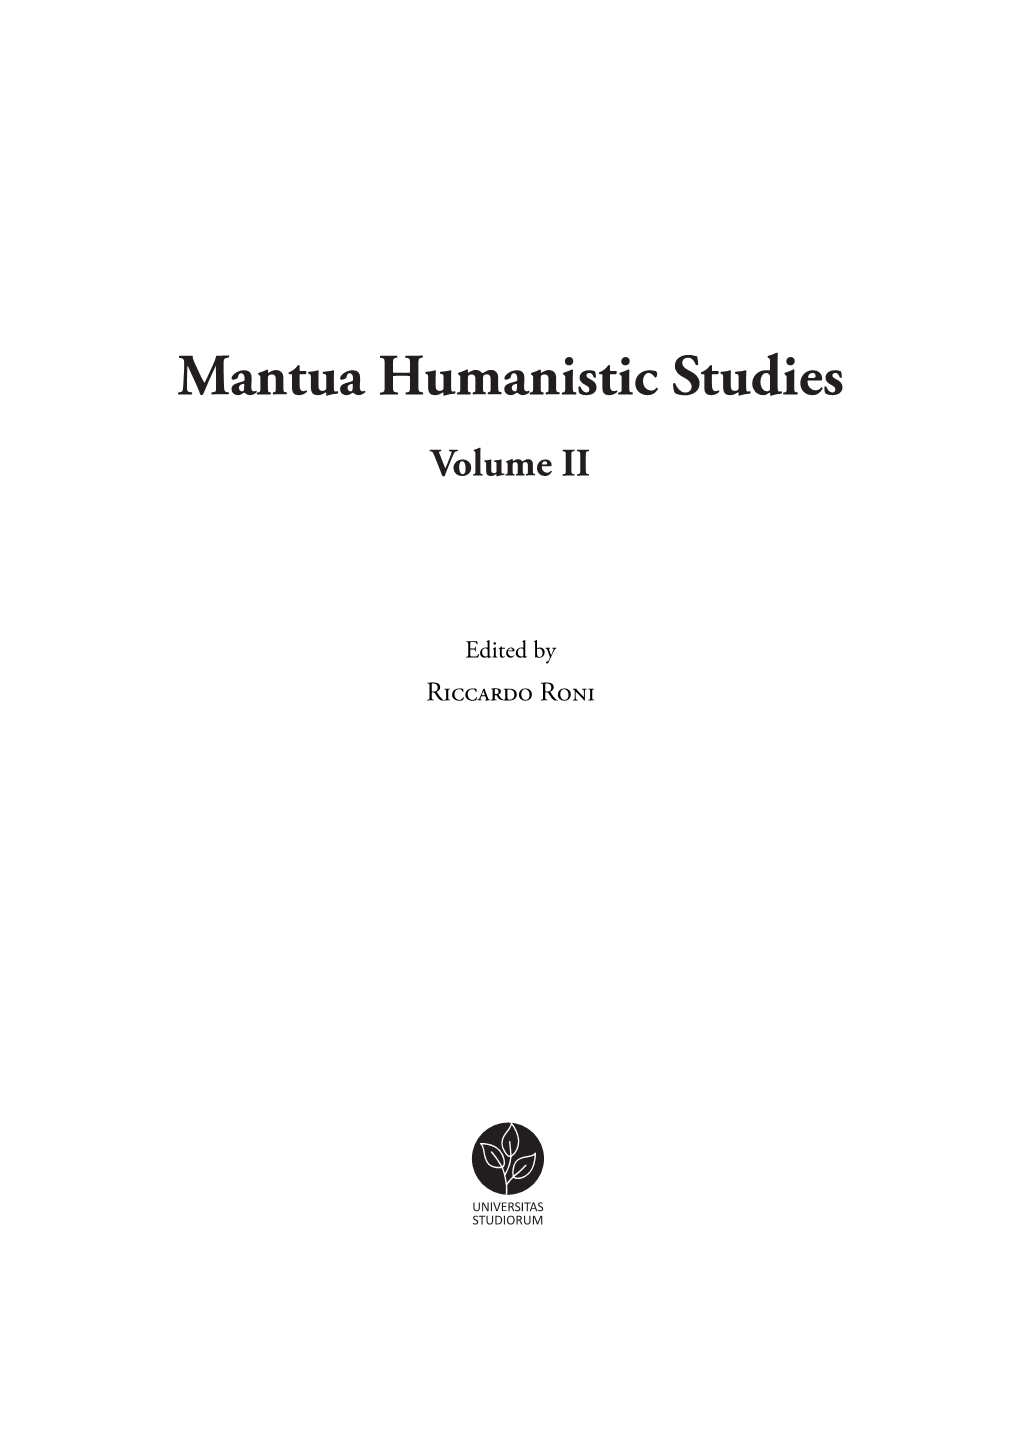 Mantua Humanistic Studies Volume II